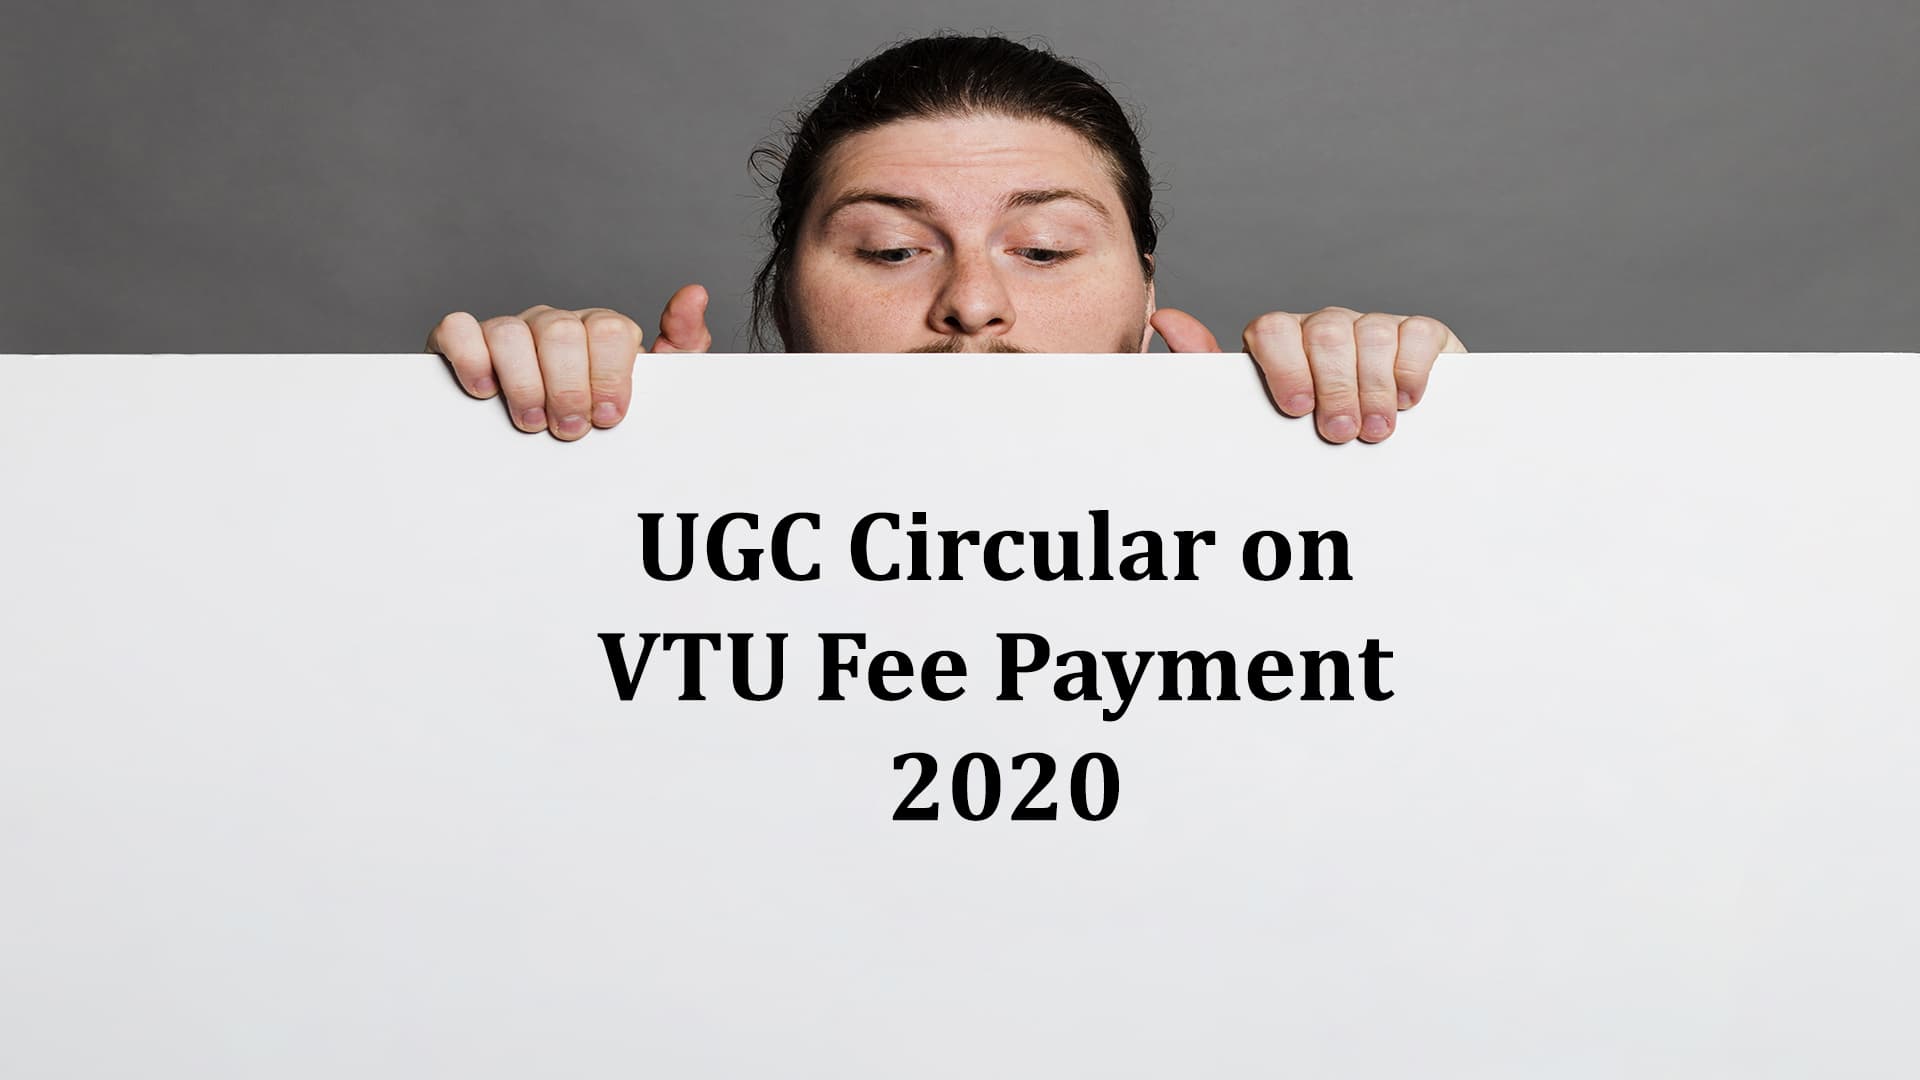 UGC Circular on VTU Fee Payment 2020